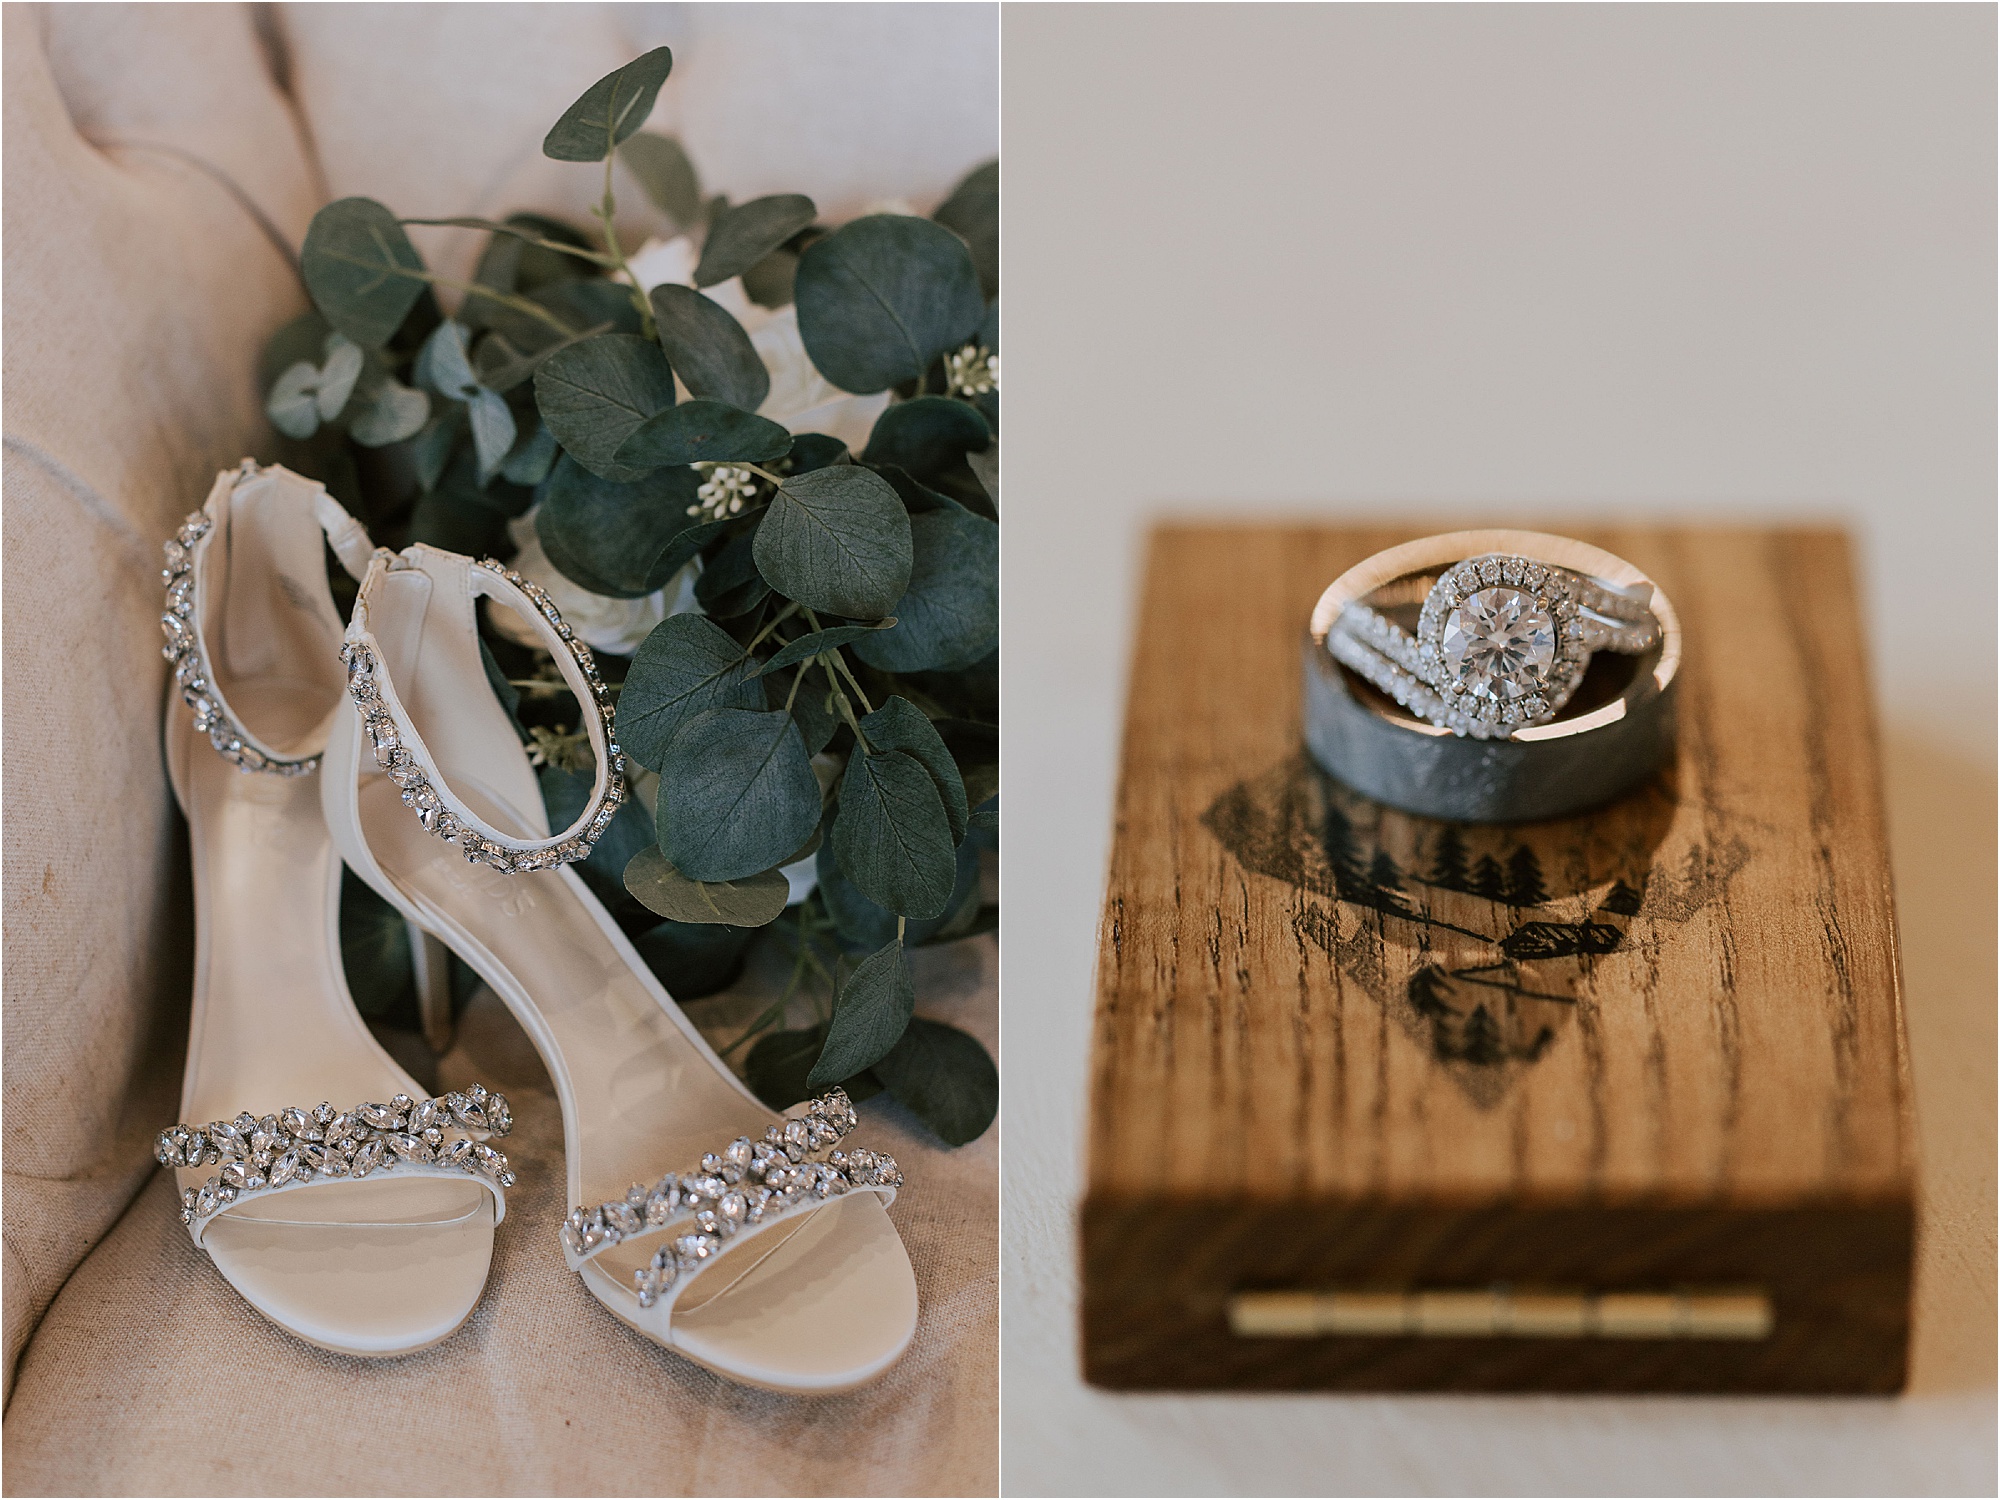 wedding ring and wedding shoe detail photos